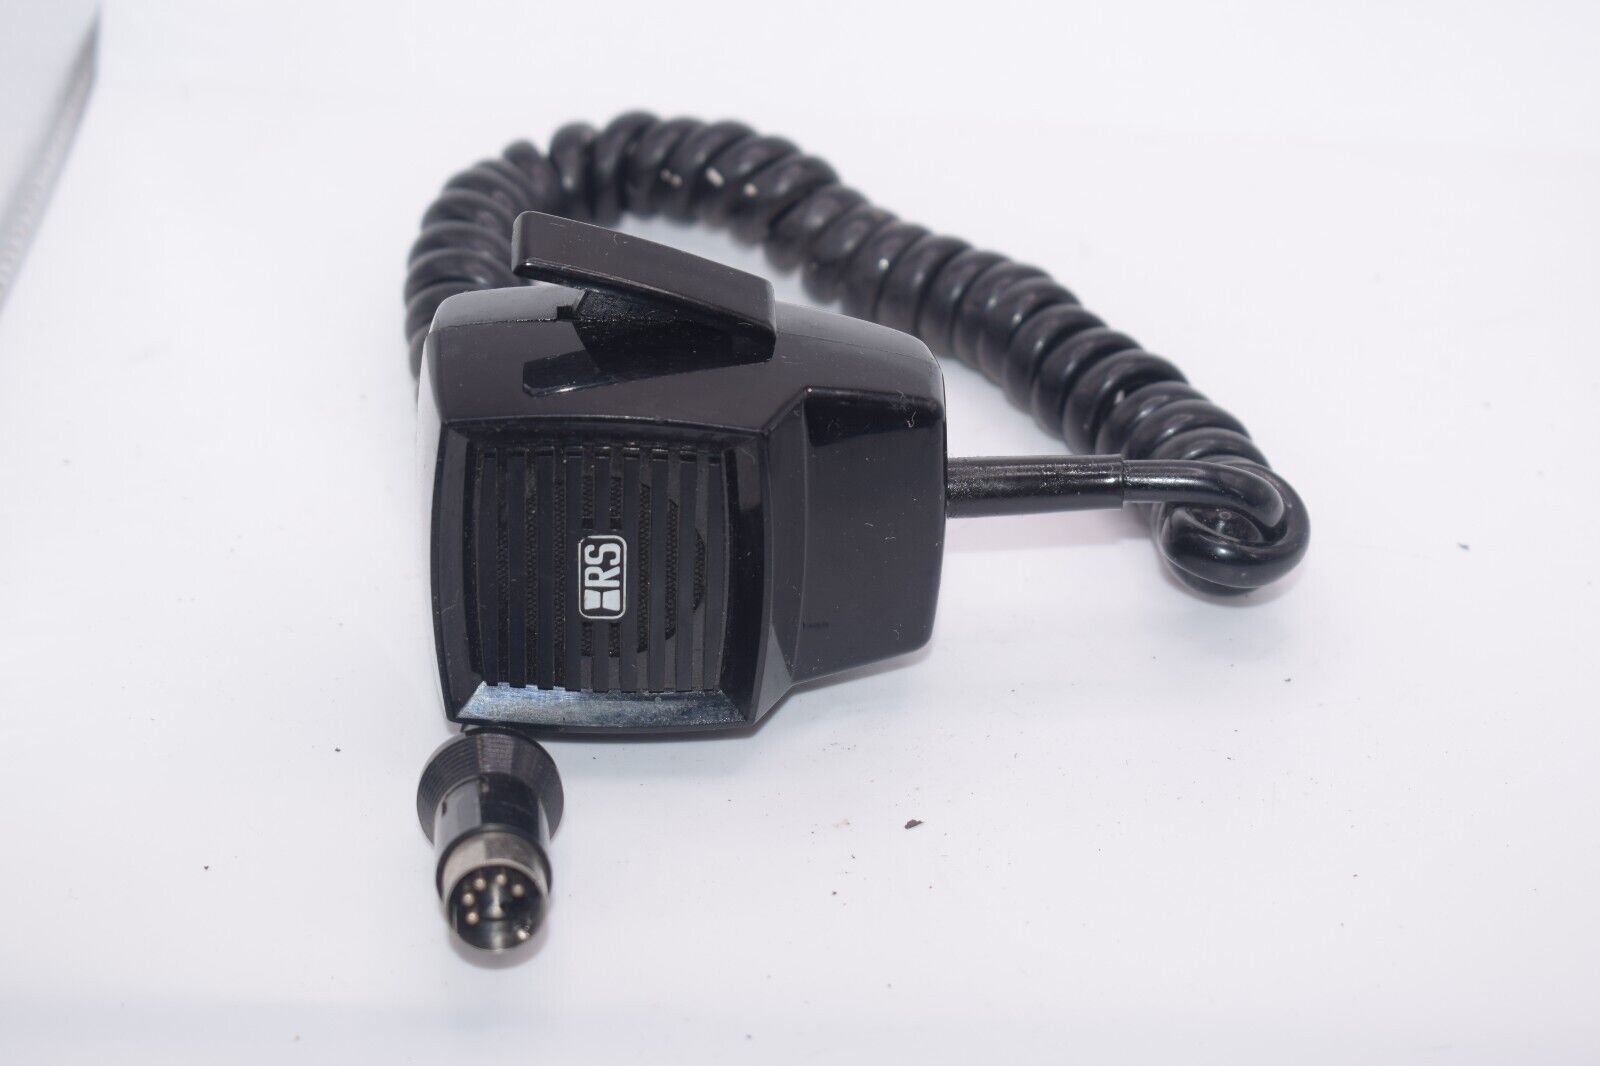 Realistic 21-1172 Palm Handheld Dynamic Microphone -cb Ham Two Way Radio